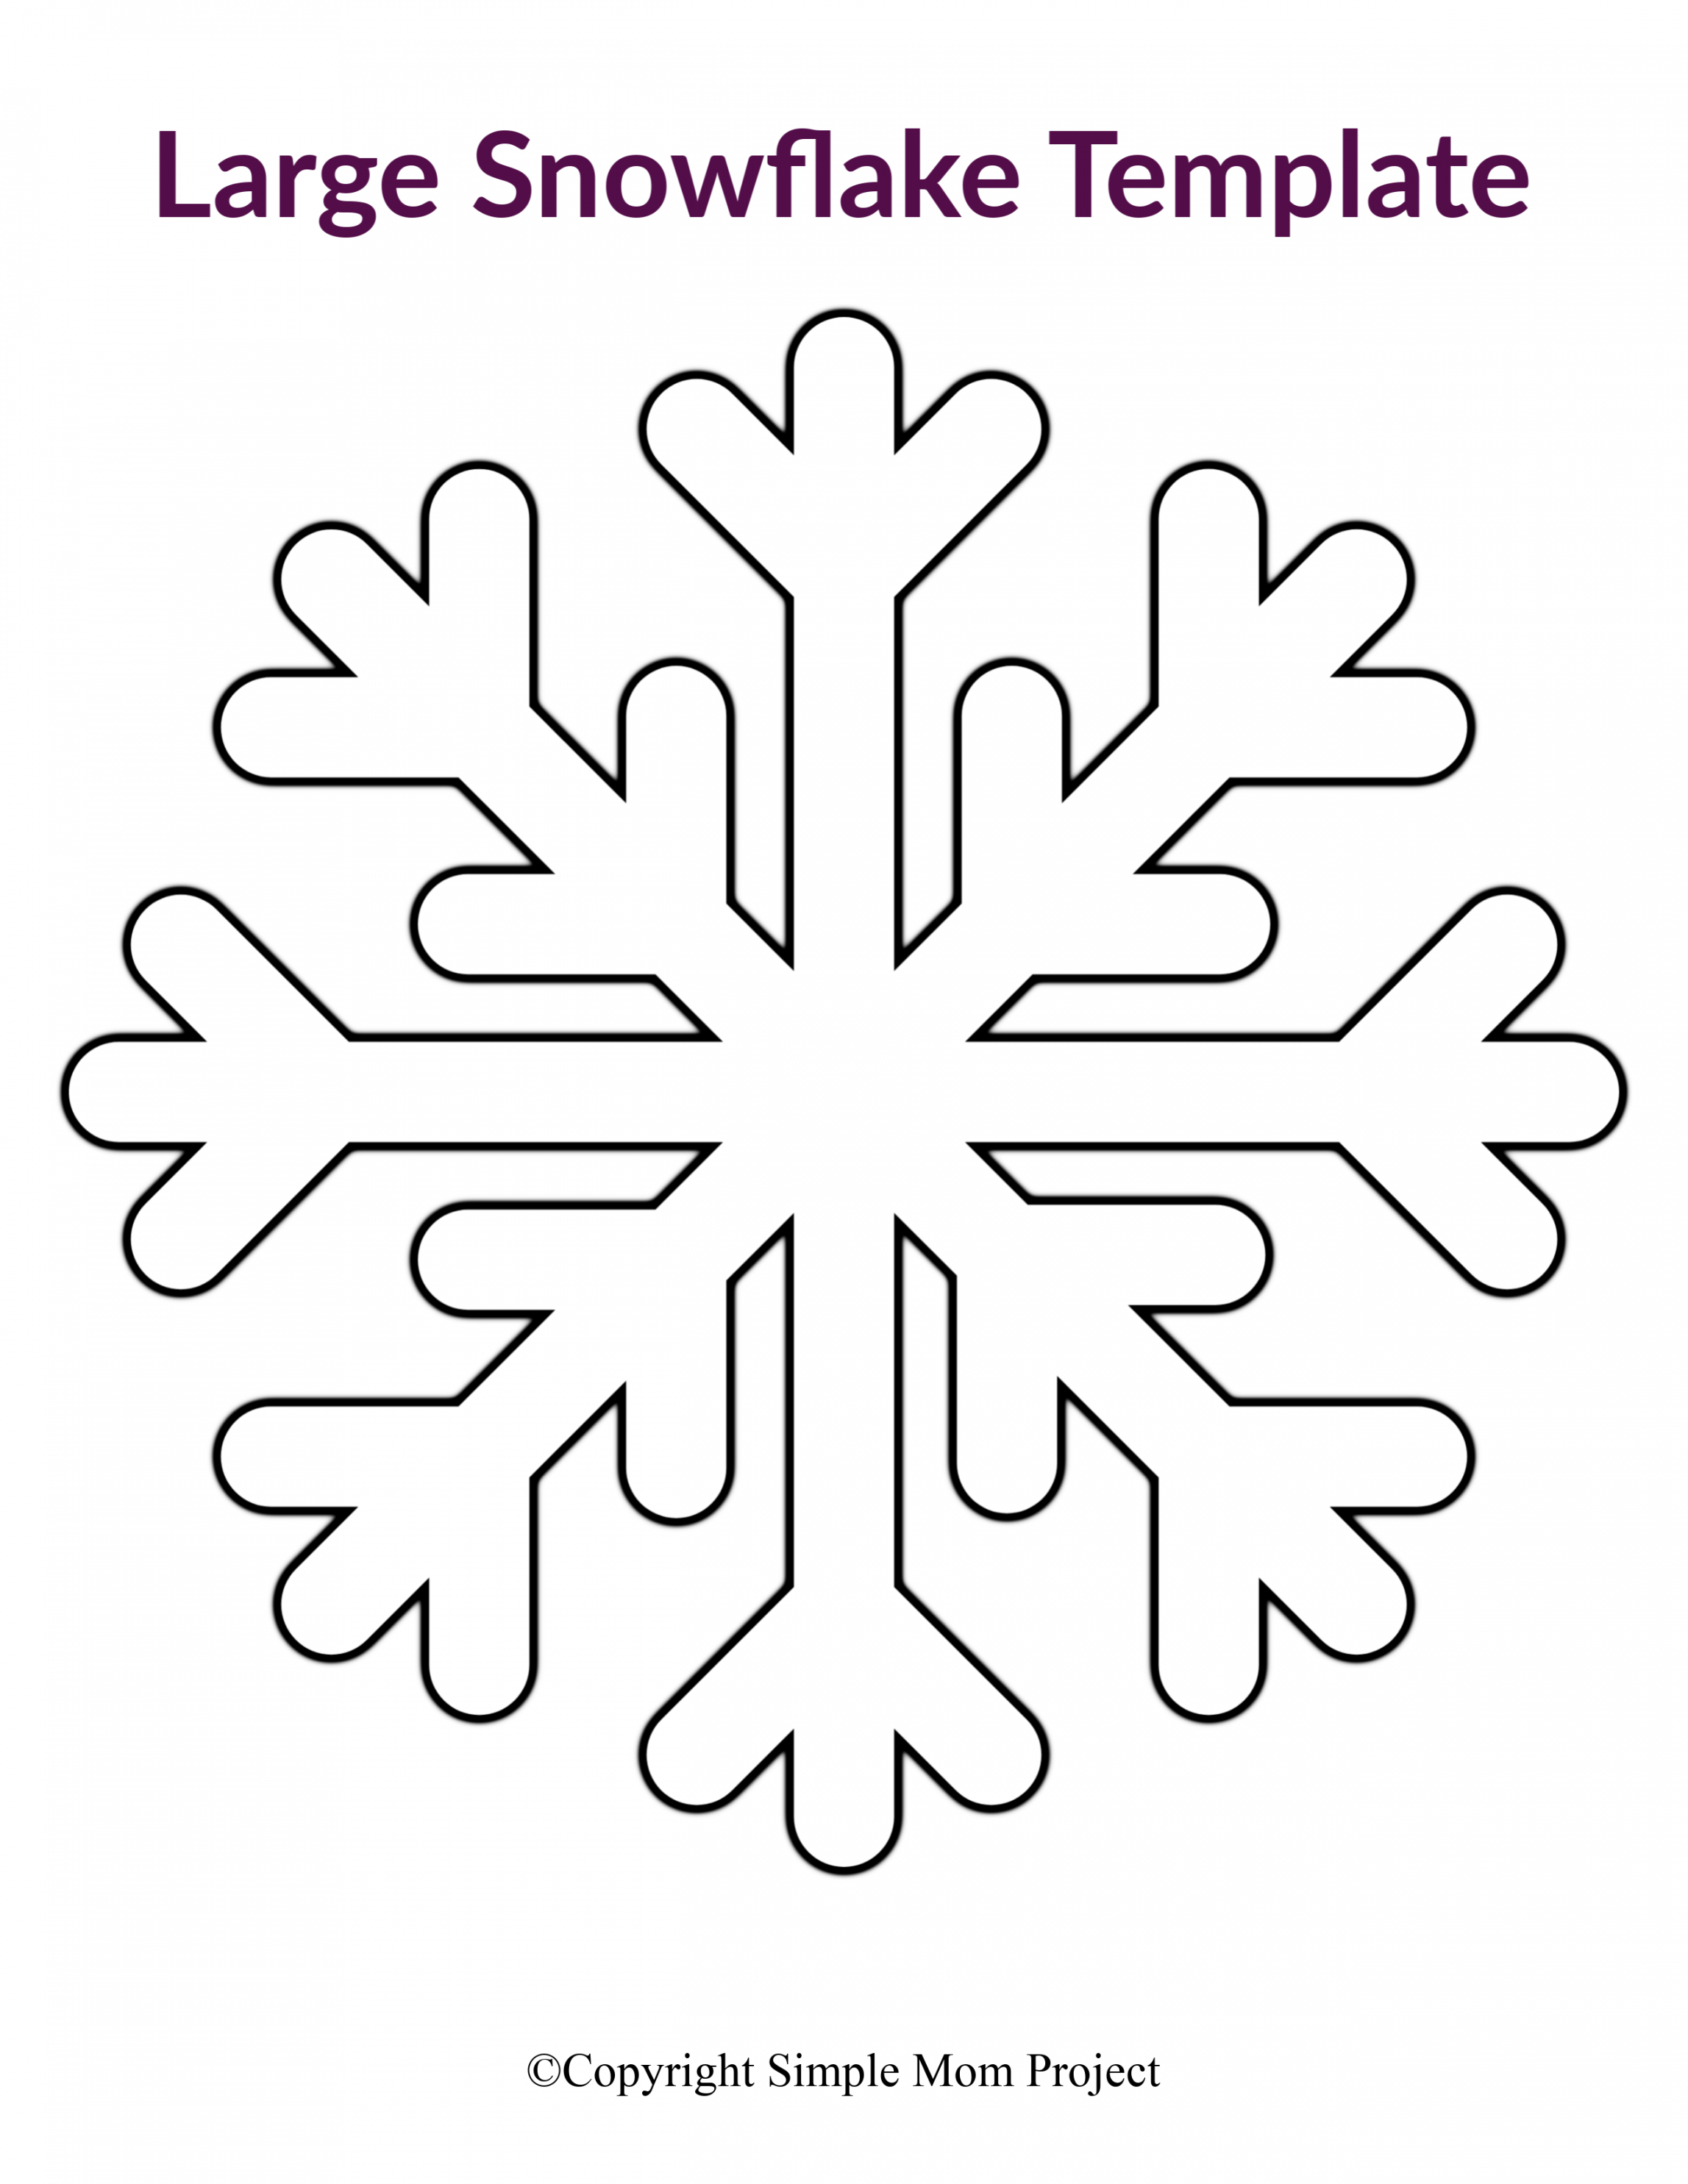 Free Printable Large Snowflake Templates - Simple Mom Project - FREE Printables - Printable Snowflake